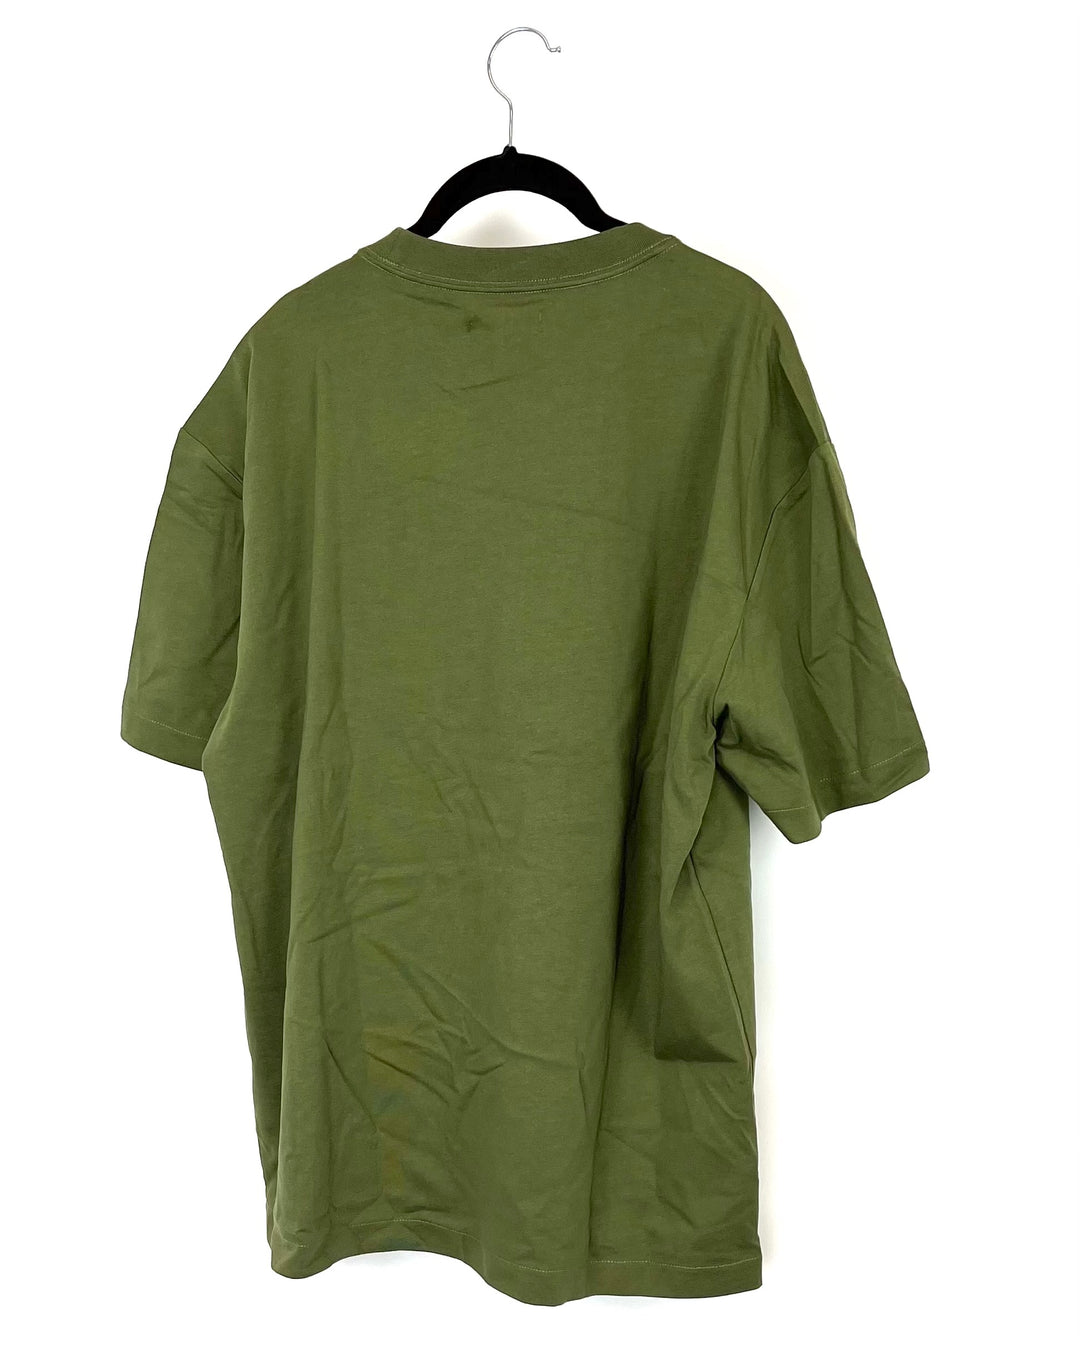 MENS Logo Army Green T-Shirt - Medium